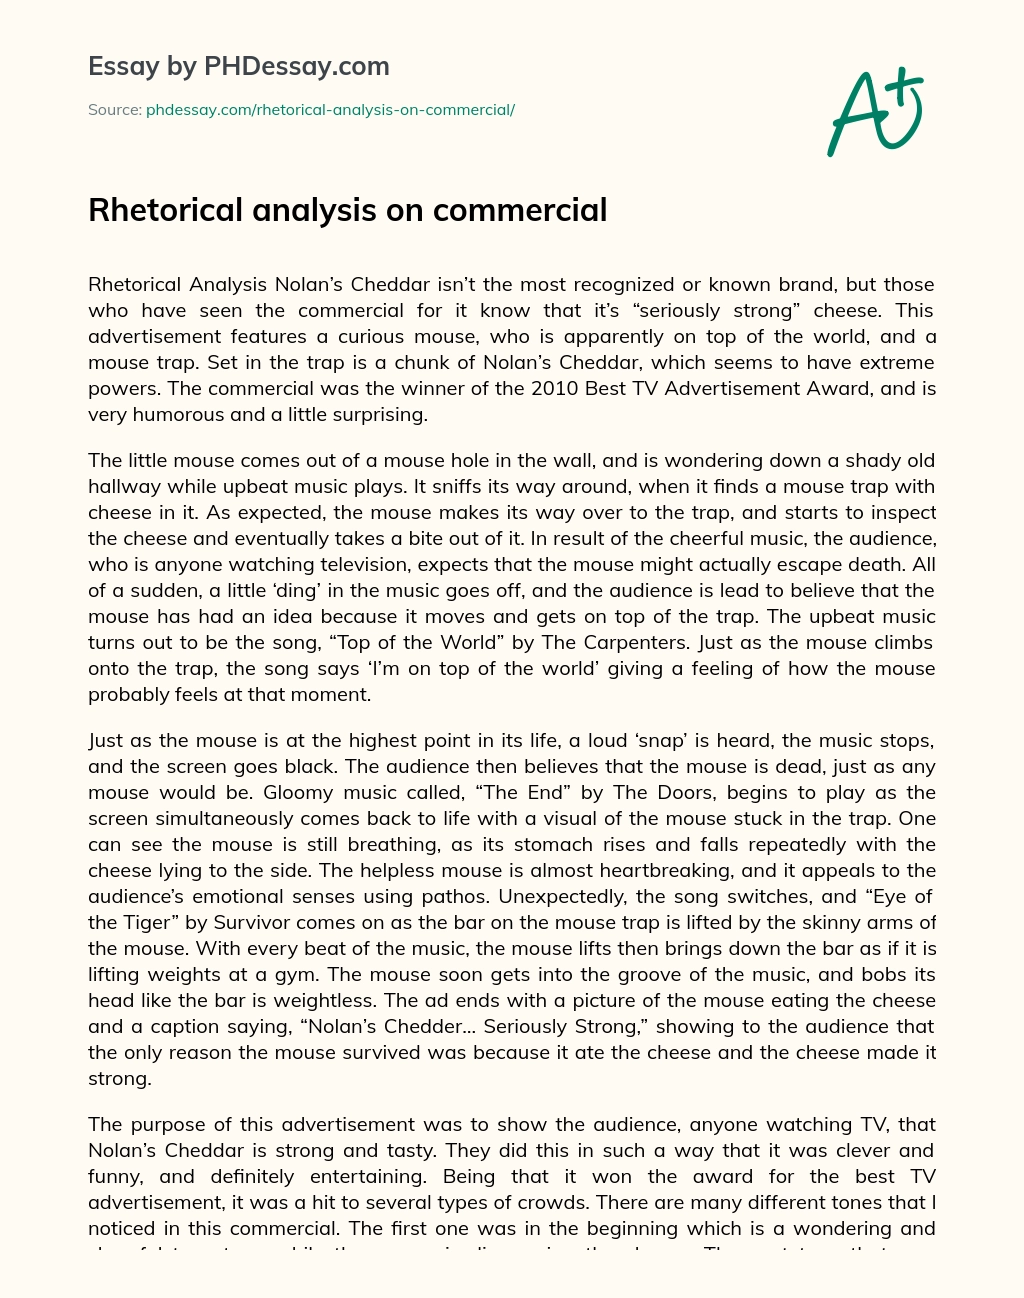 Rhetorical analysis on commercial essay